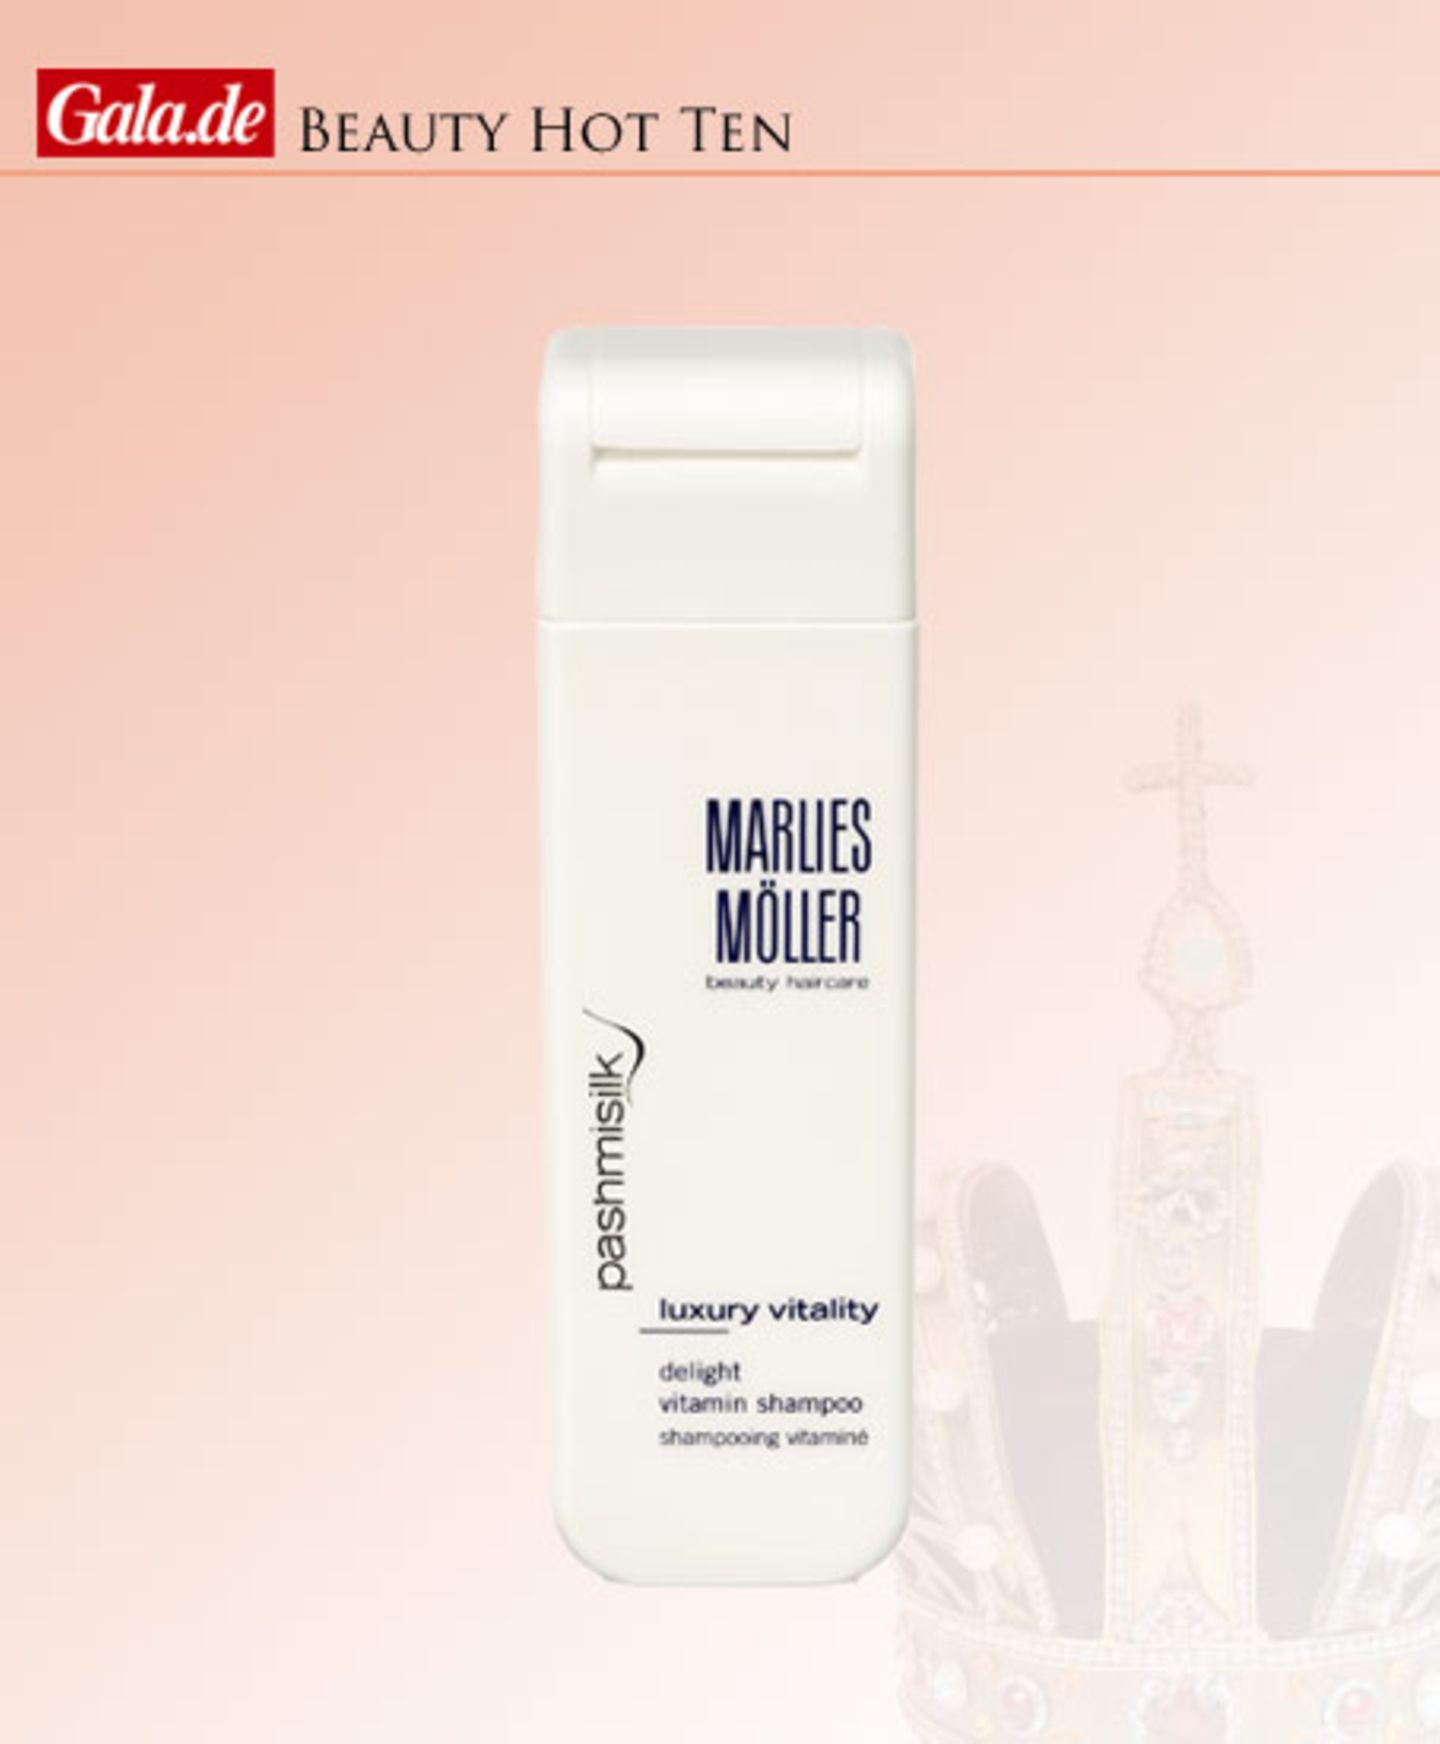 "Pashmisilk Delight Vitamin Shampoo" von Marlies Möller